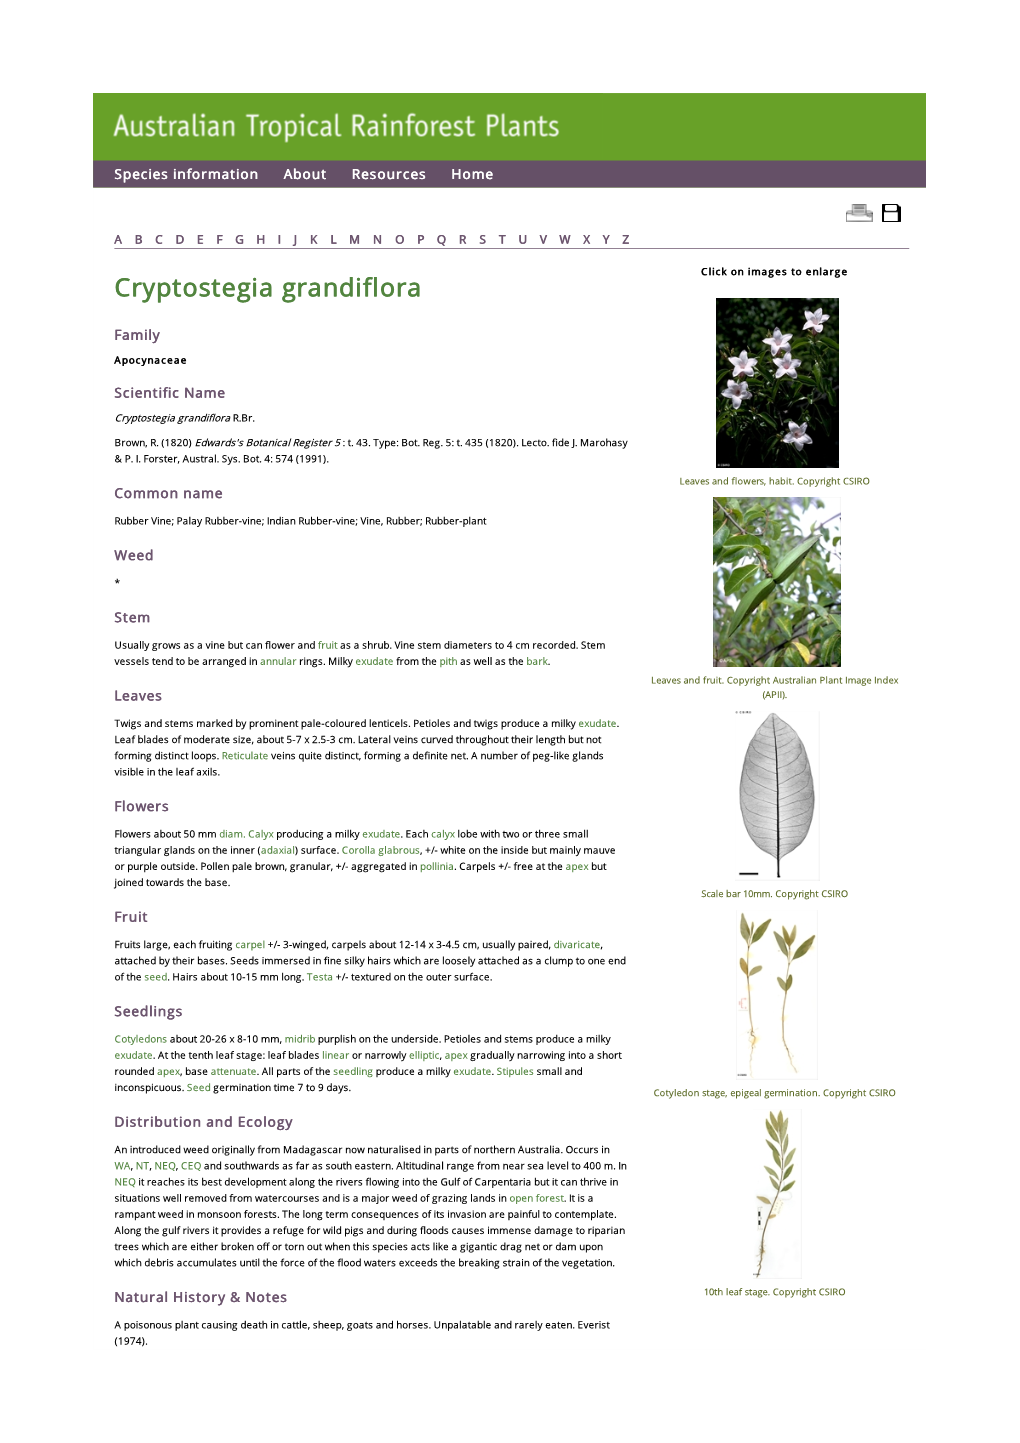 Cryptostegia Grandiflora Click on Images to Enlarge